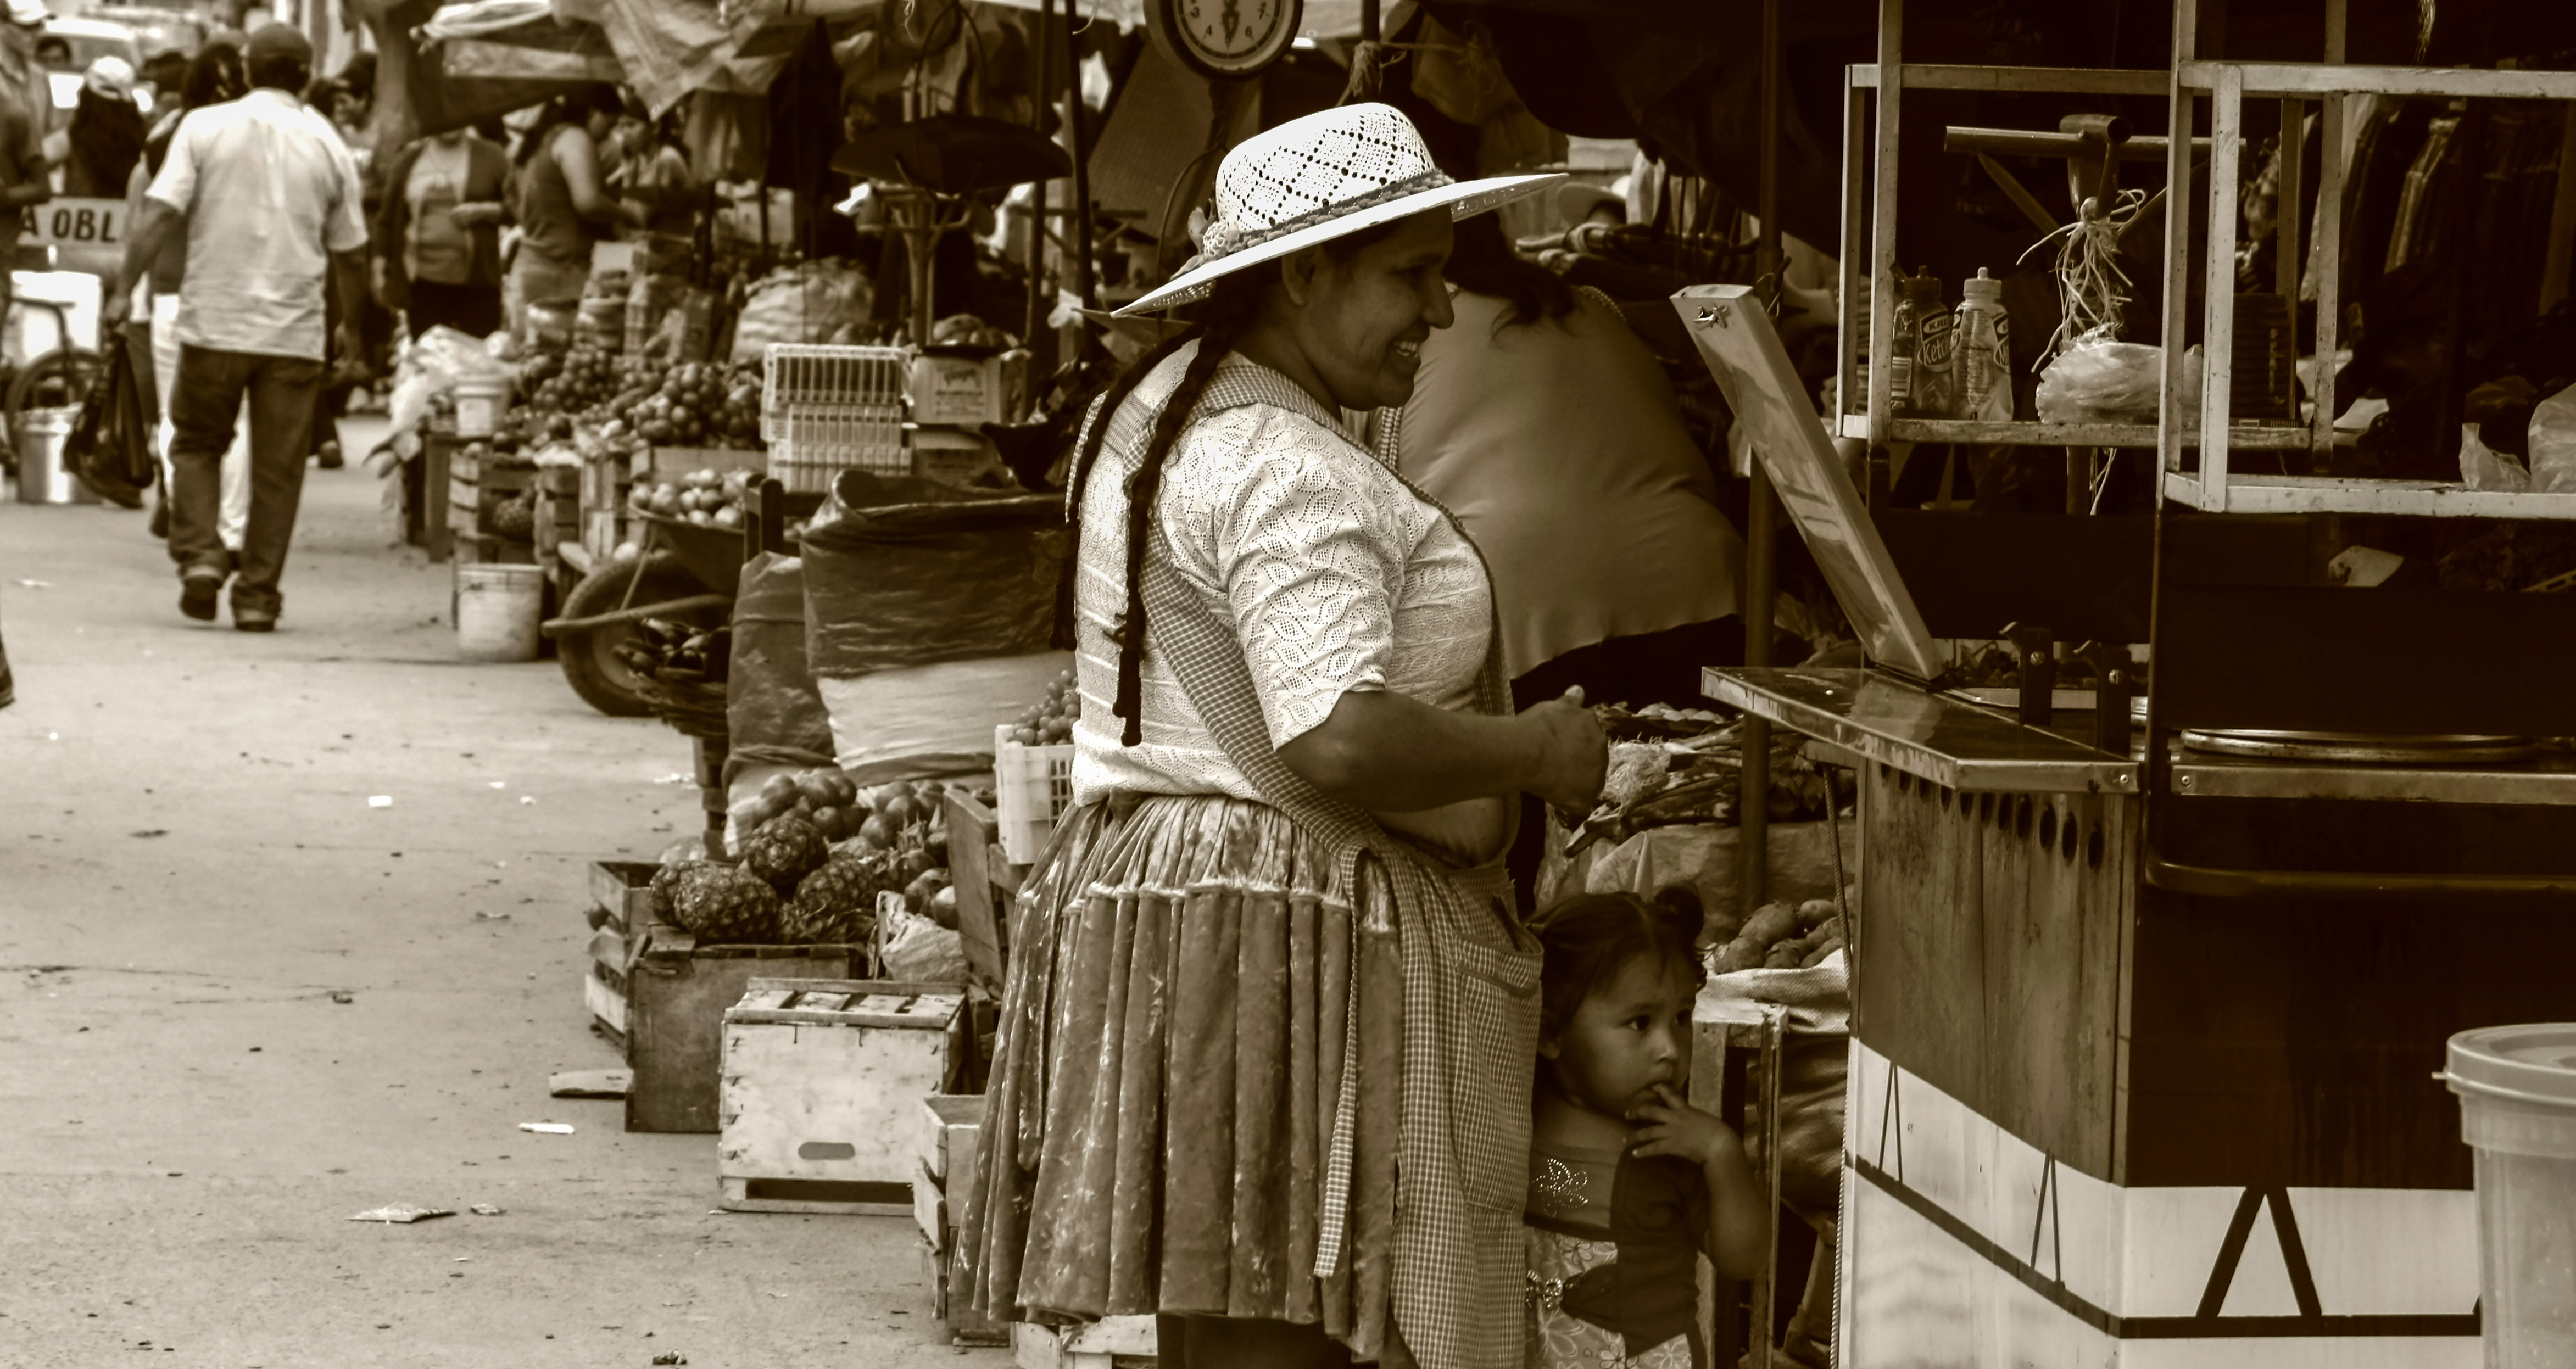 El mercado Samaipata, Santa Cruz, Bolivia